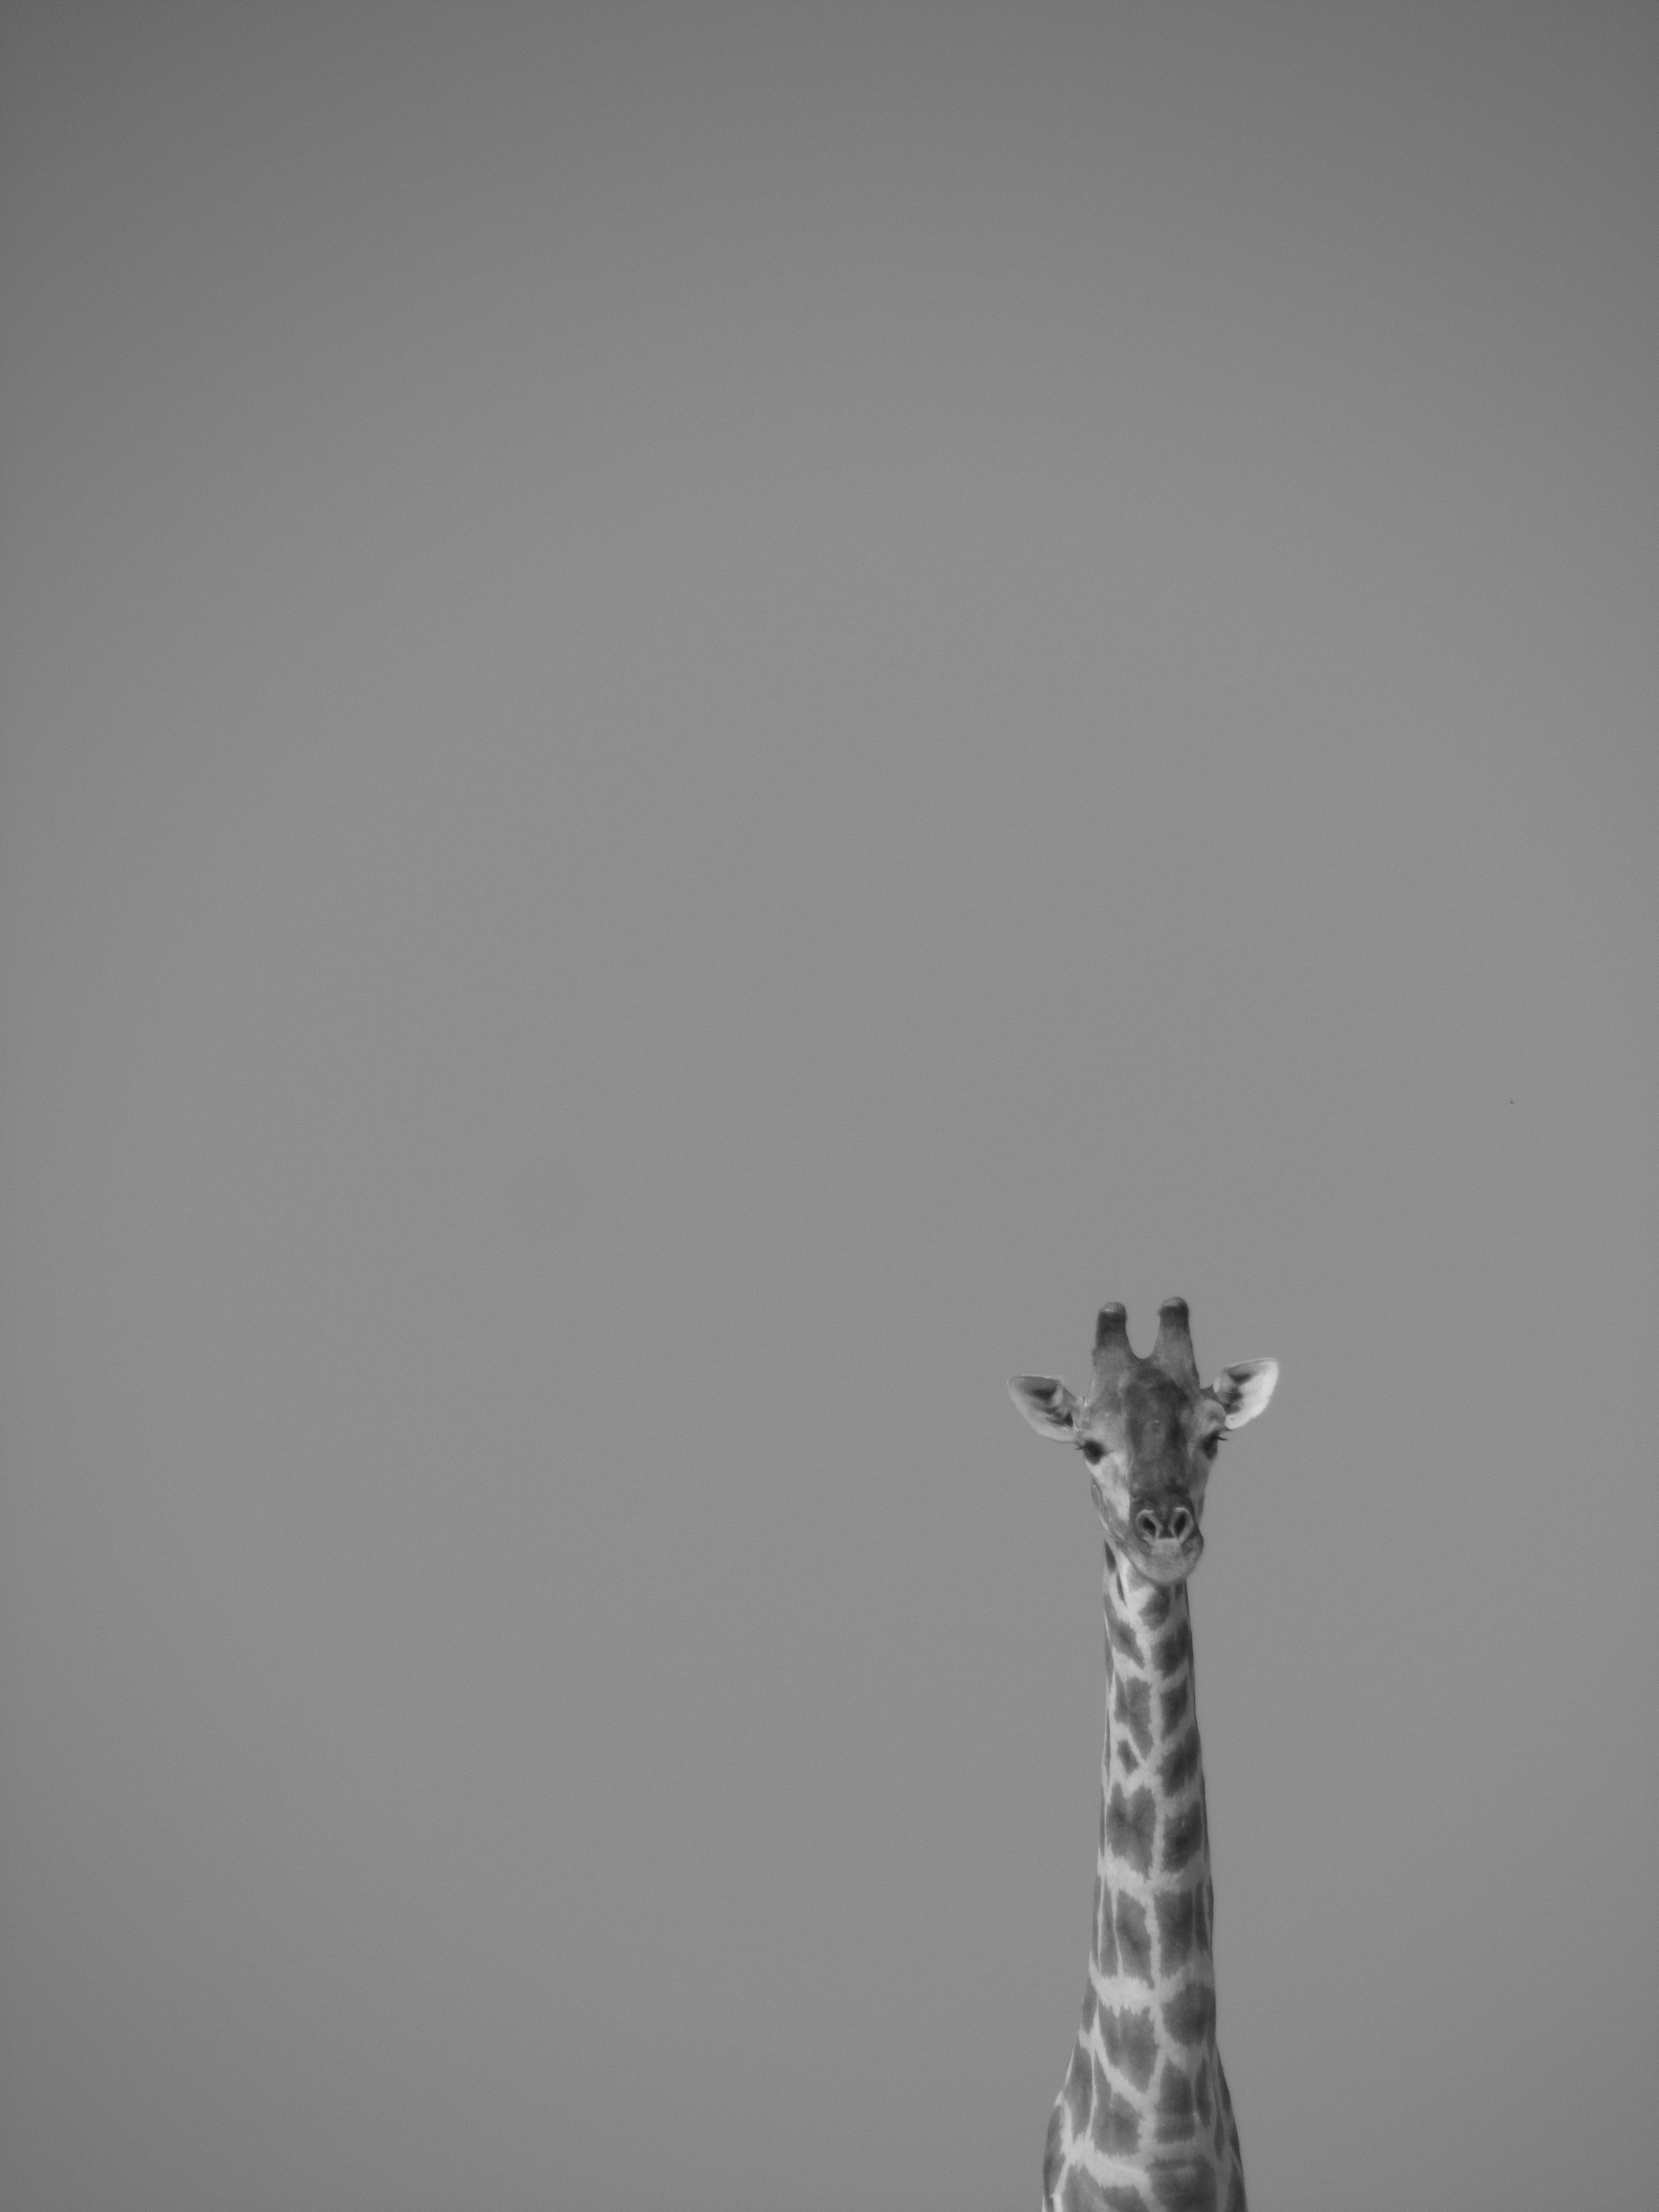 grayscale photography of giraffe